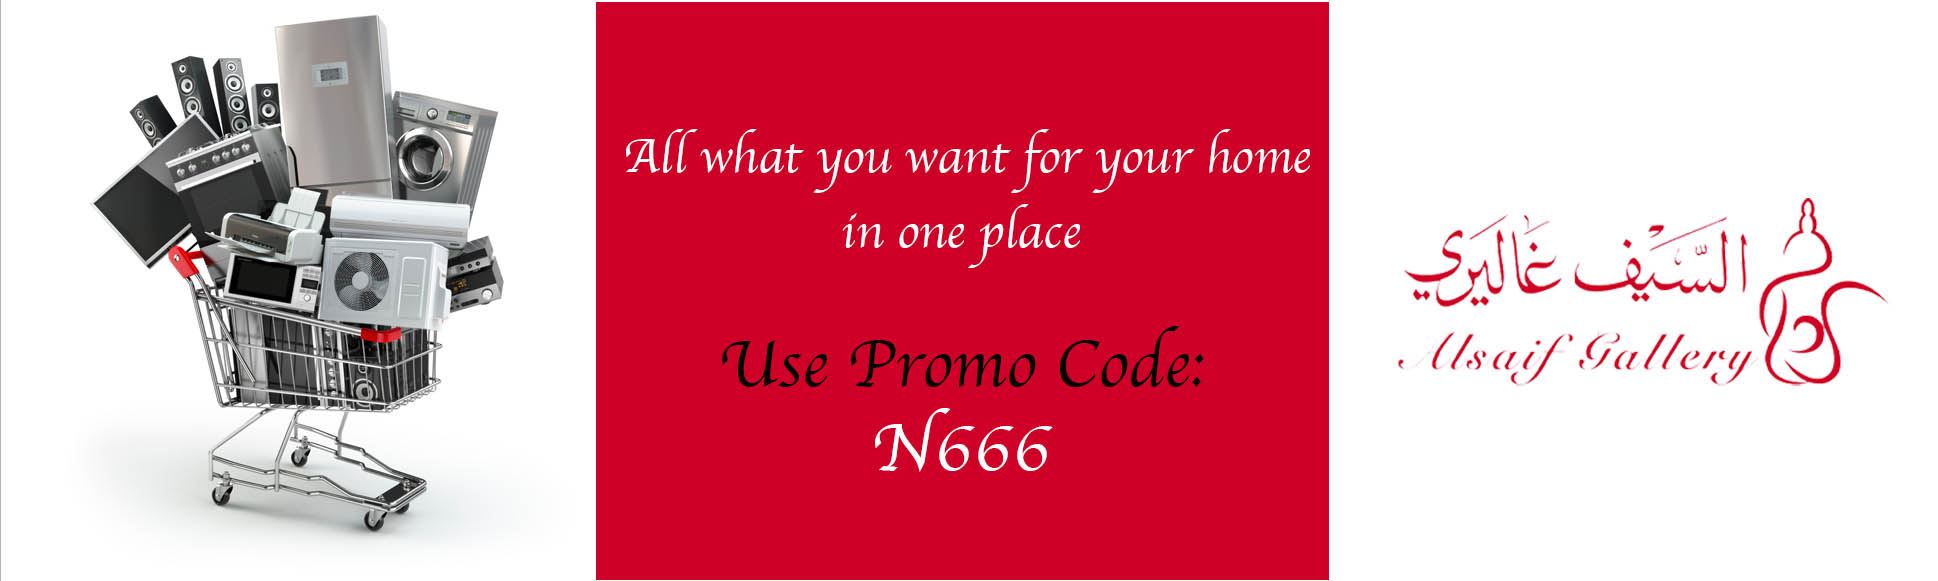 Alsaif Gallery Promo Code